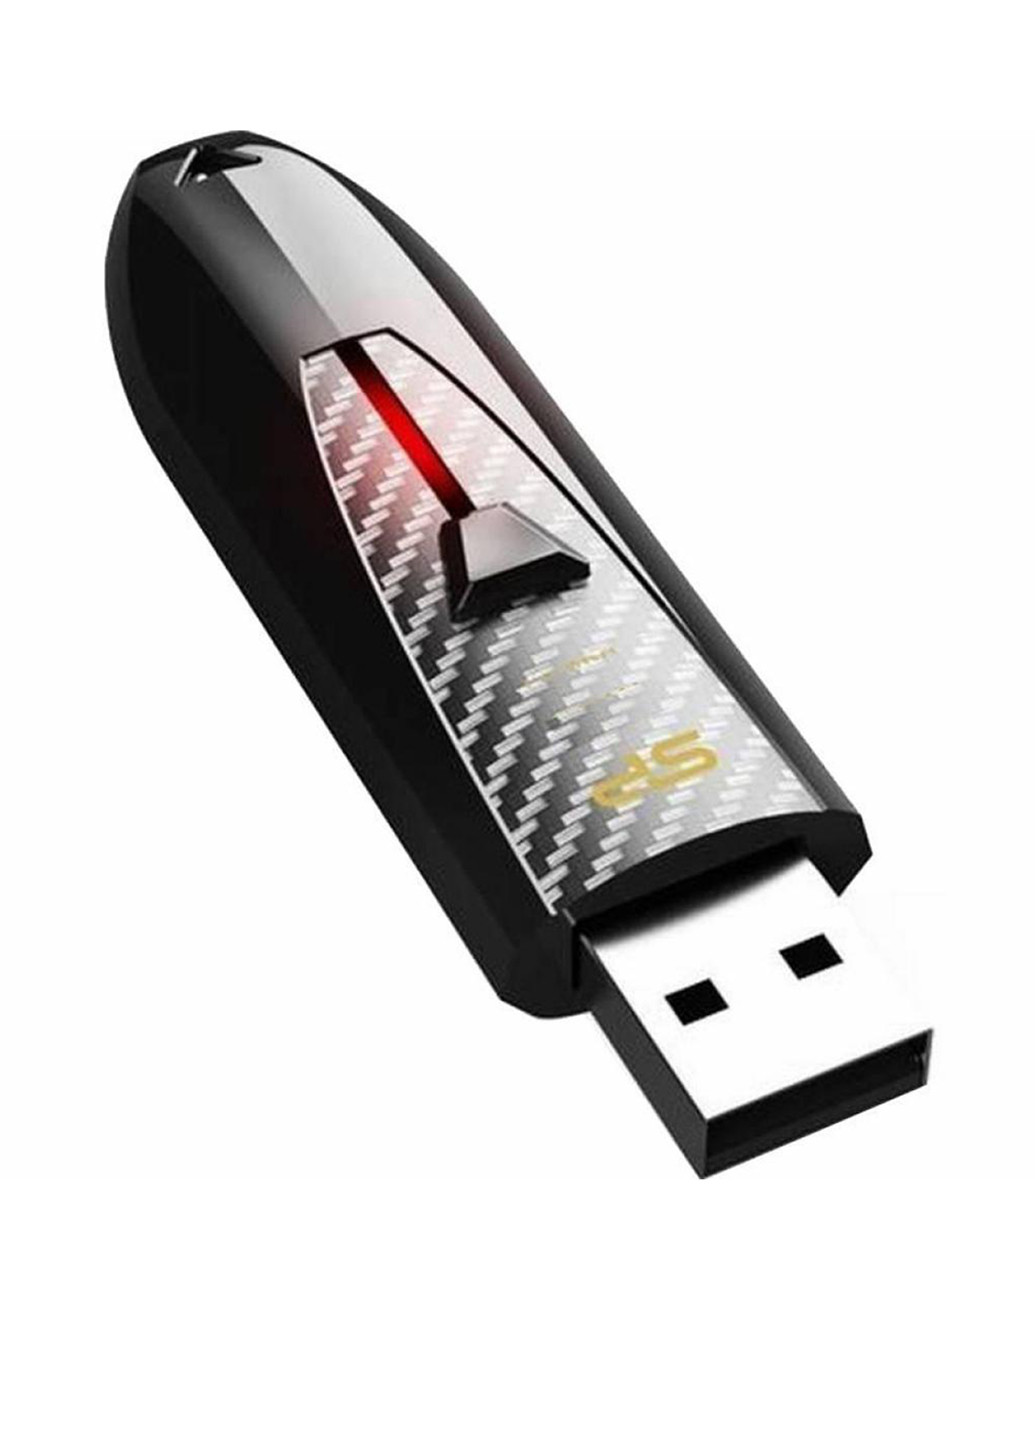 Флеш пам'ять USB Blaze B25 16GB USB 3.0 Black (SP016GBUF3B25V1K) Silicon Power флеш память usb silicon power blaze b25 16gb usb 3.0 black (sp016gbuf3b25v1k) (130221132)